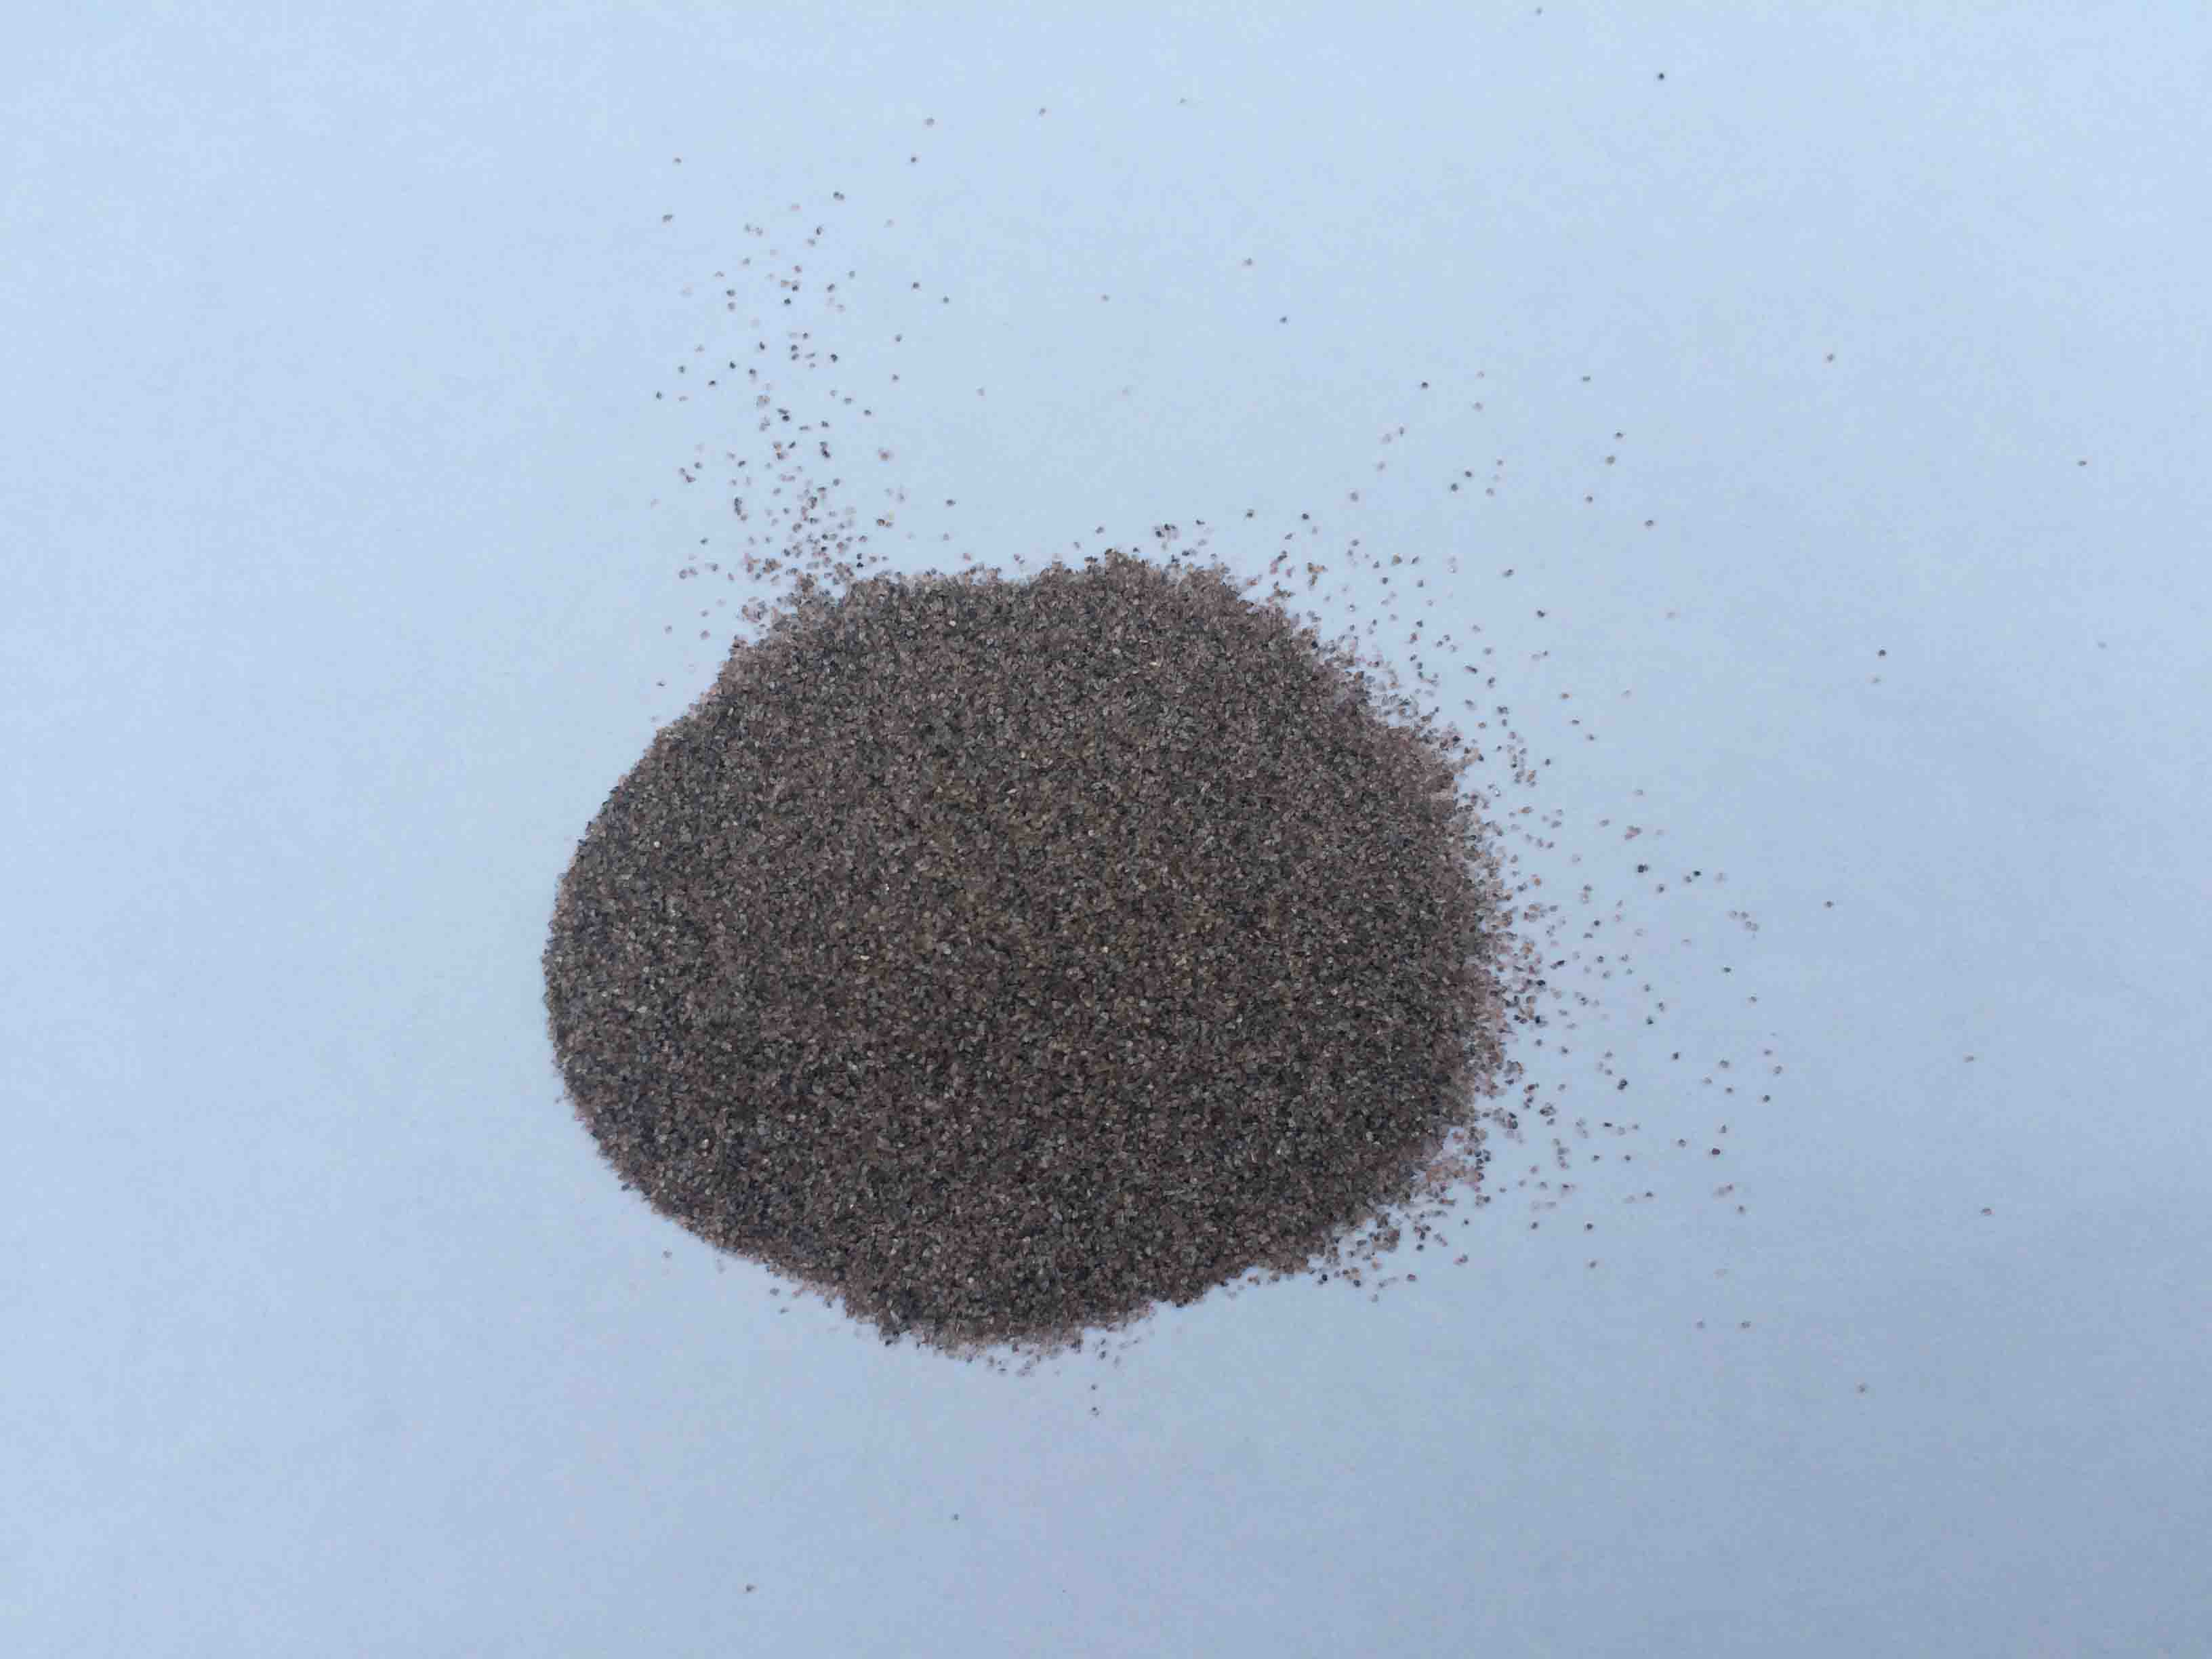 Brown Fused Aluminium Oxide for Bonded Abrasives & Blasting